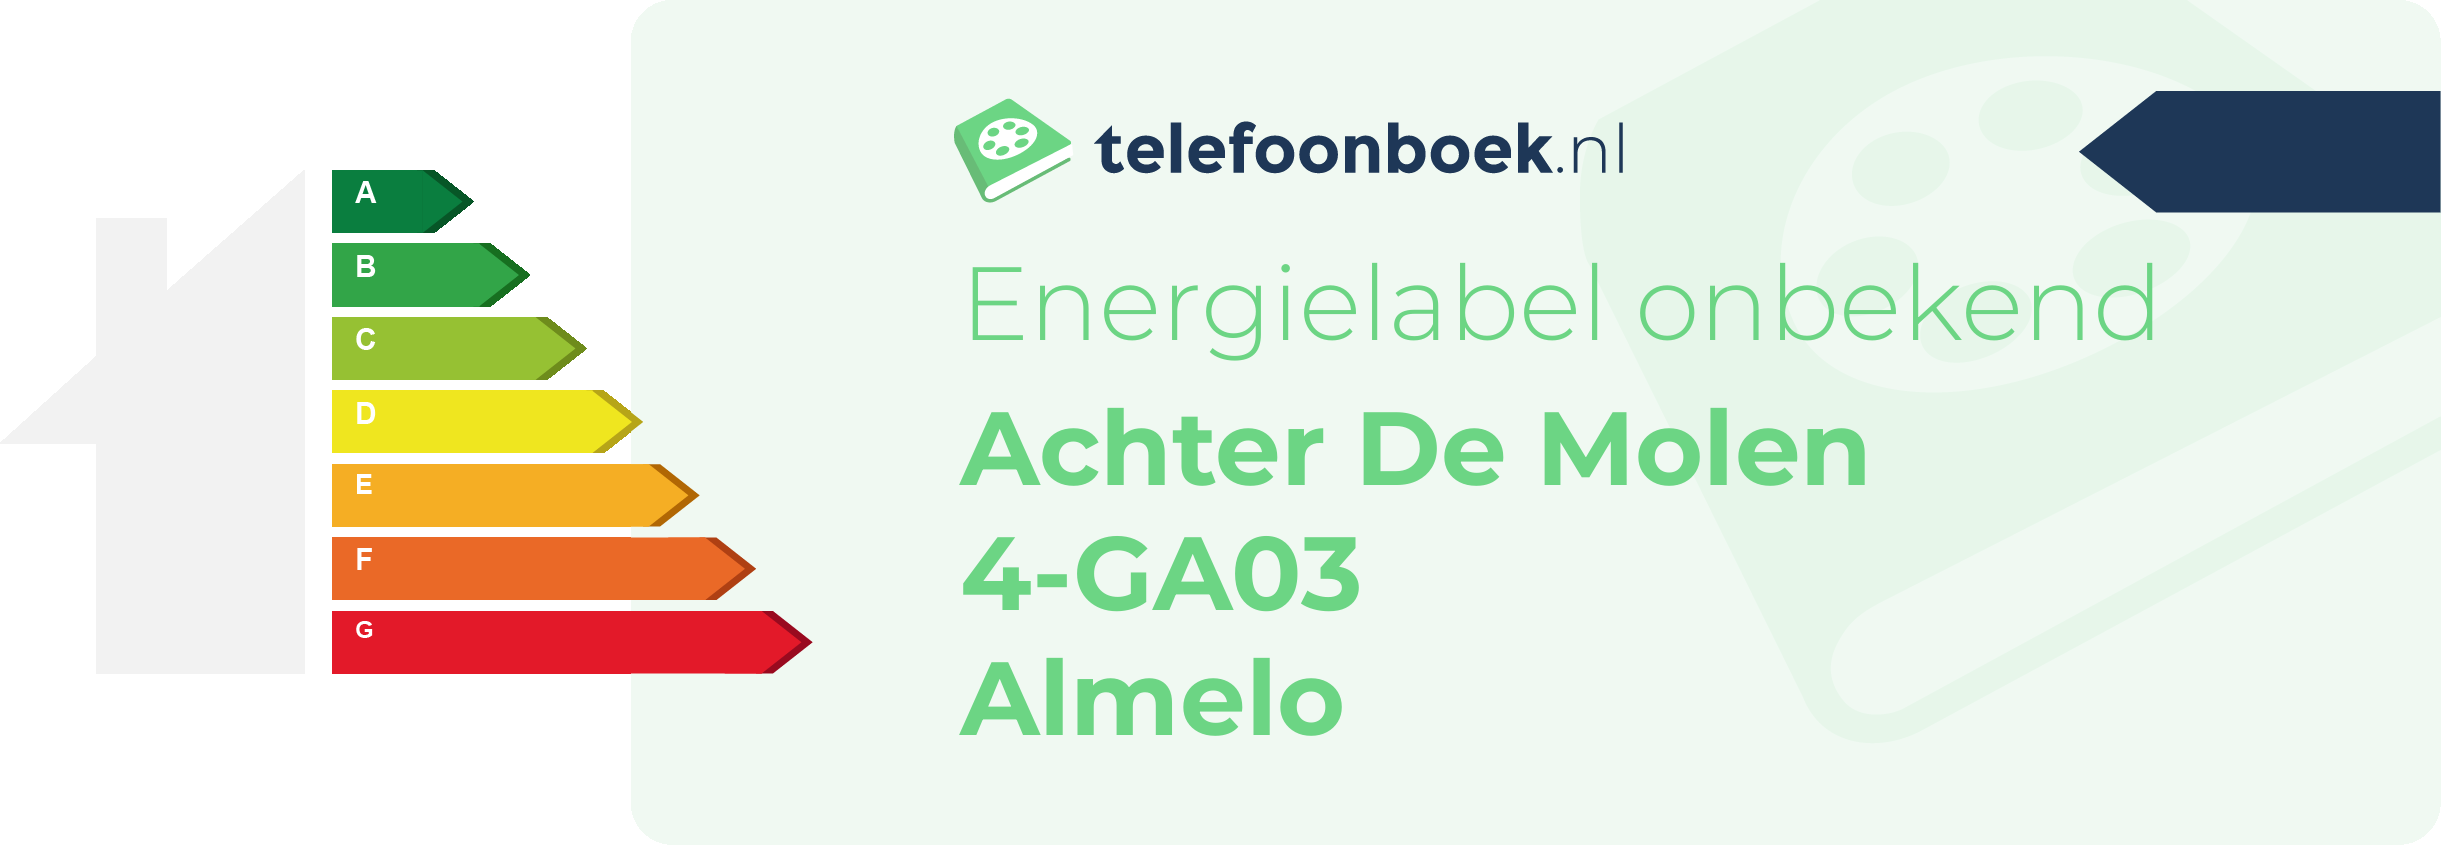 Energielabel Achter De Molen 4-GA03 Almelo